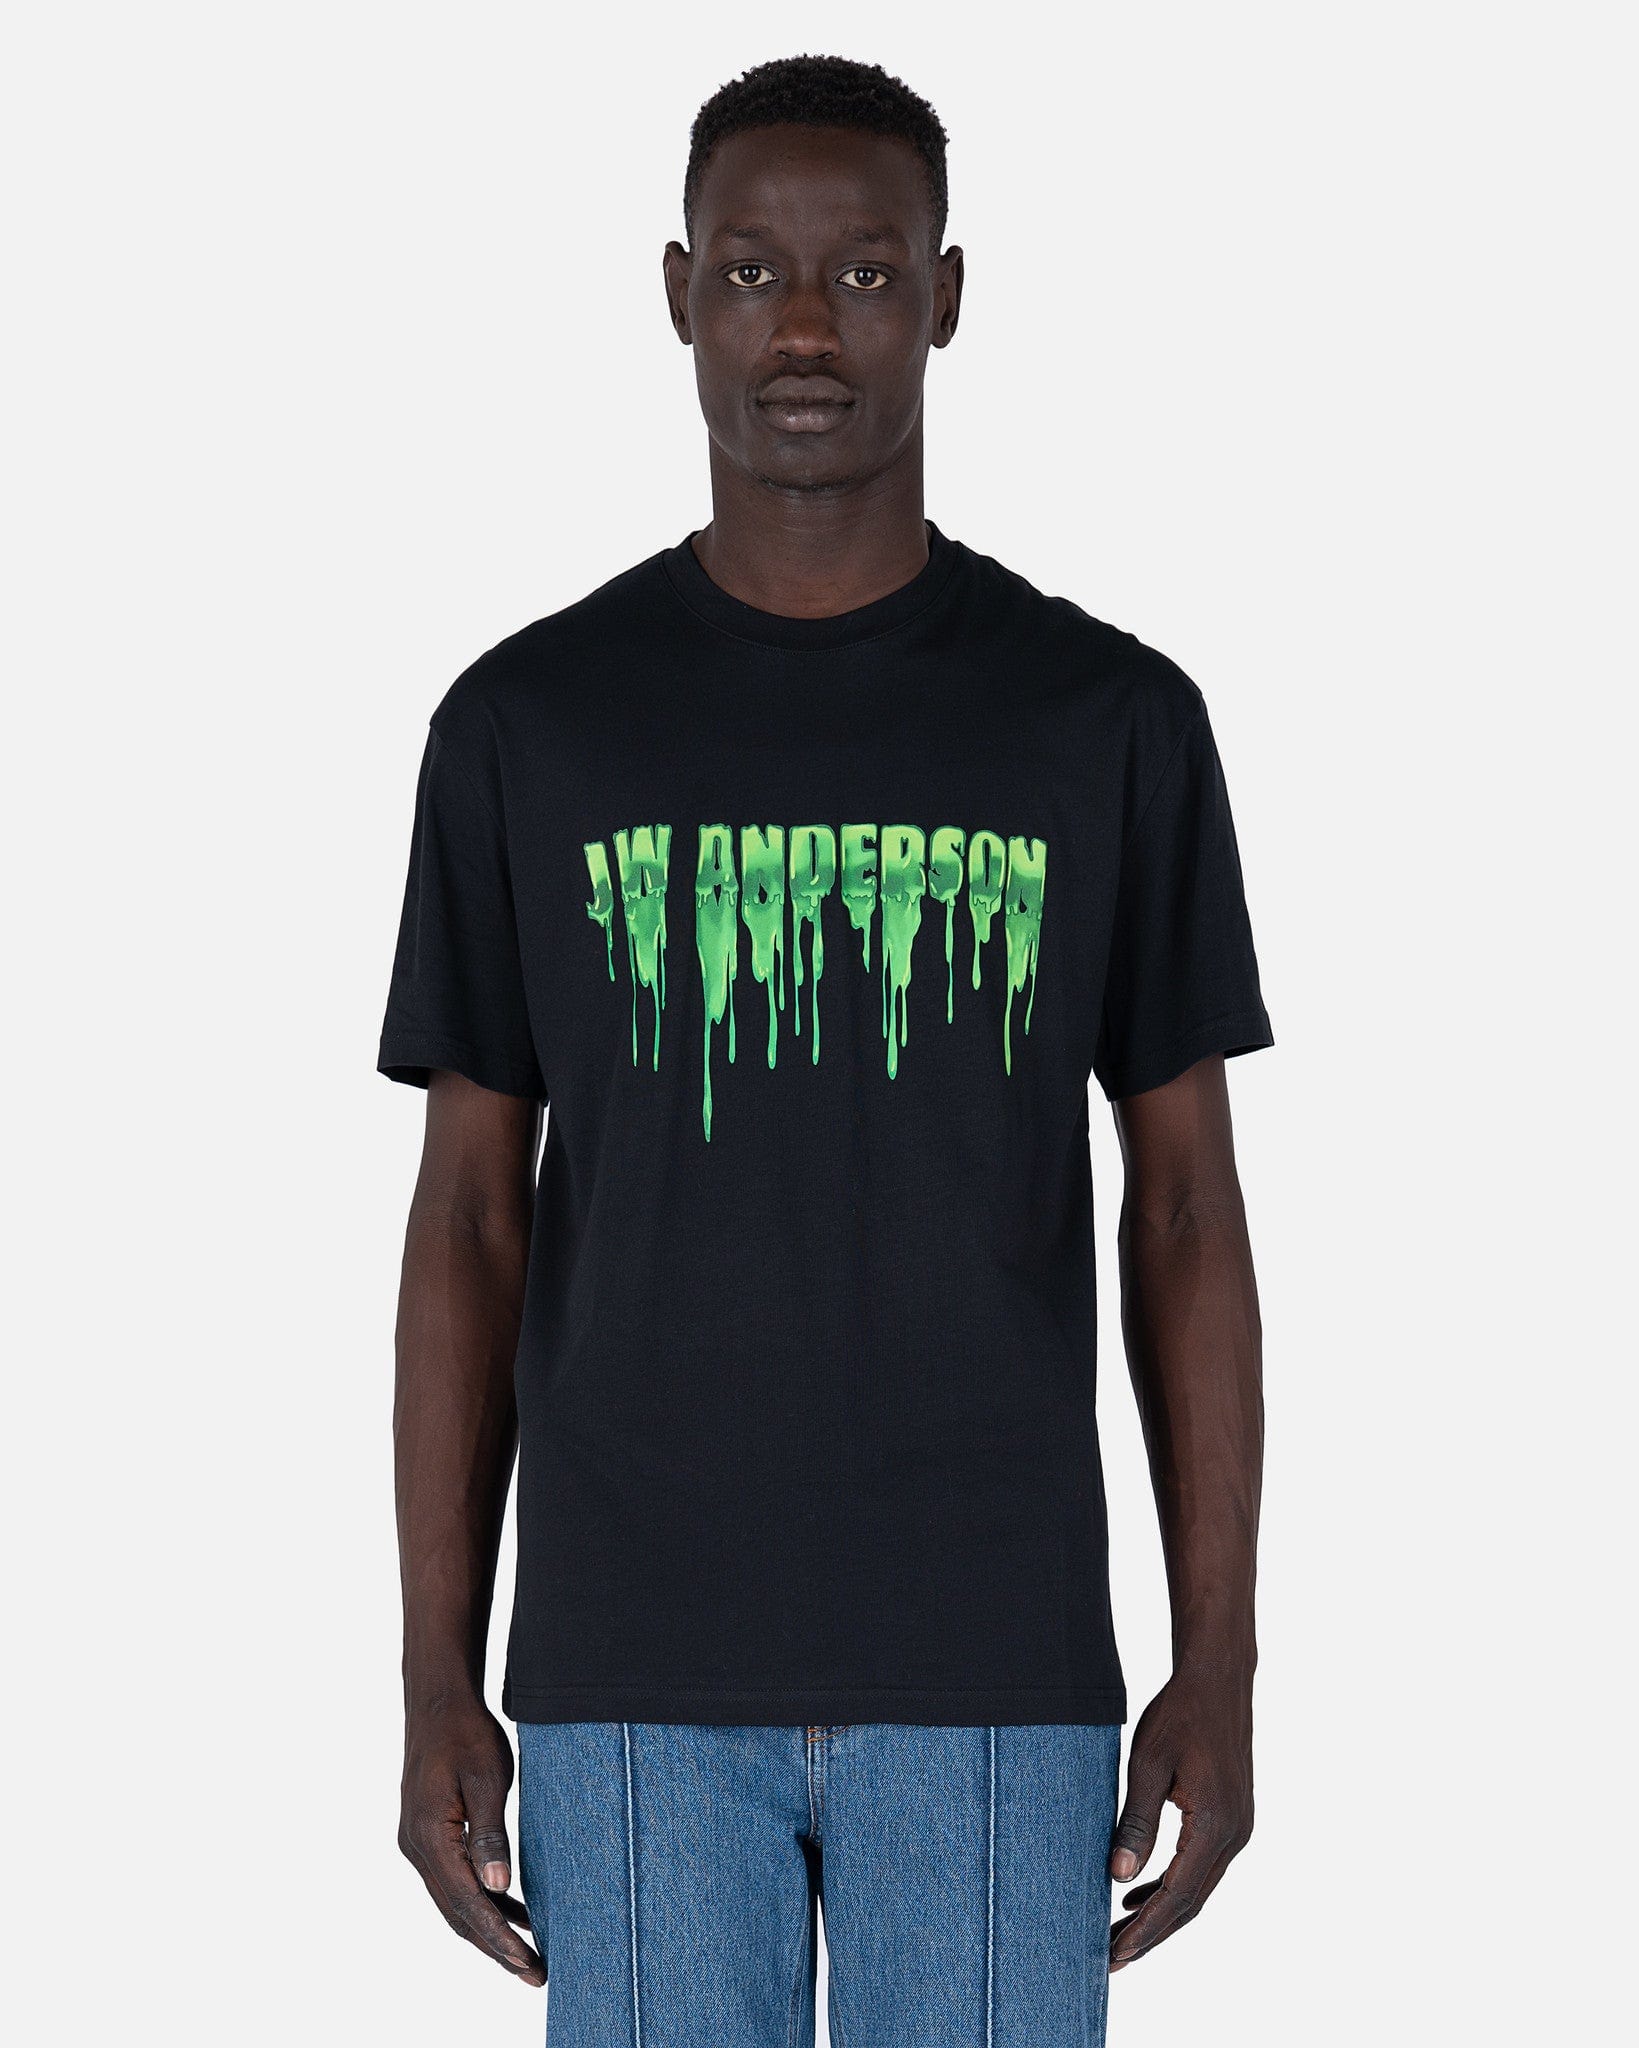 JW Anderson Men's T-Shirts Slime Logo Classic T-Shirt in Black/Green